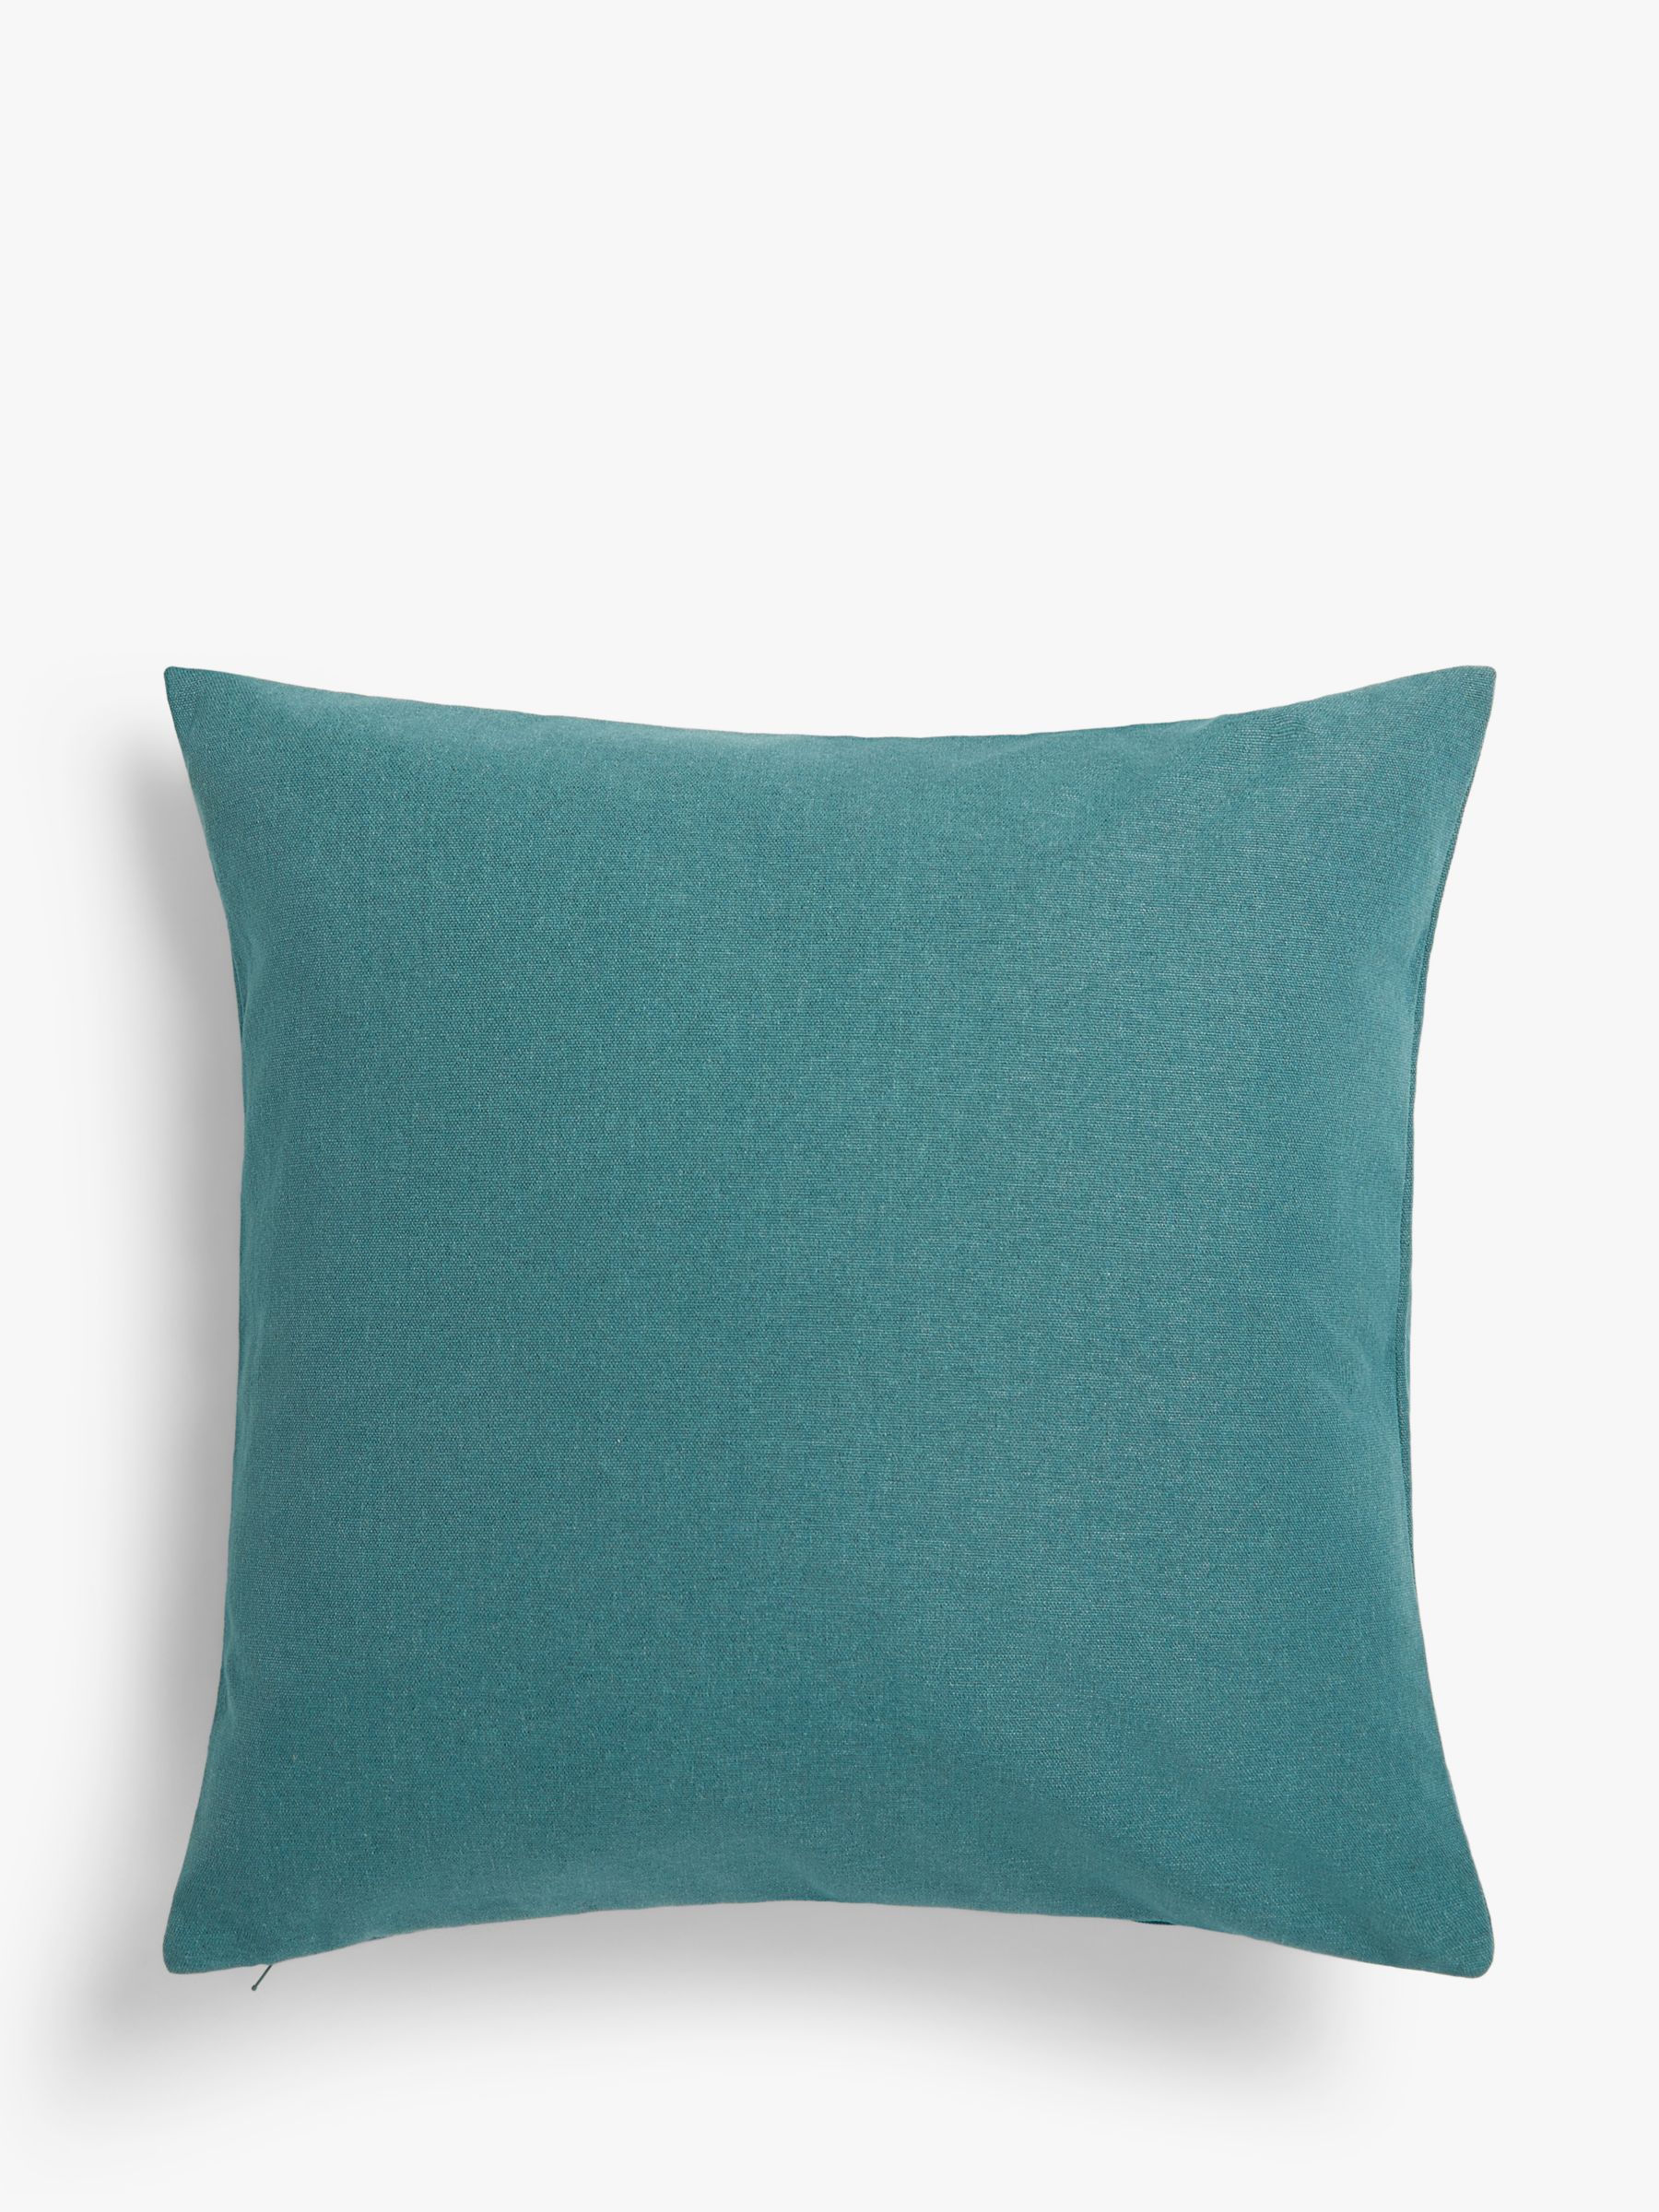 John Lewis Viburnum Fabric Cushion cover Double Sided Thistle Blue 